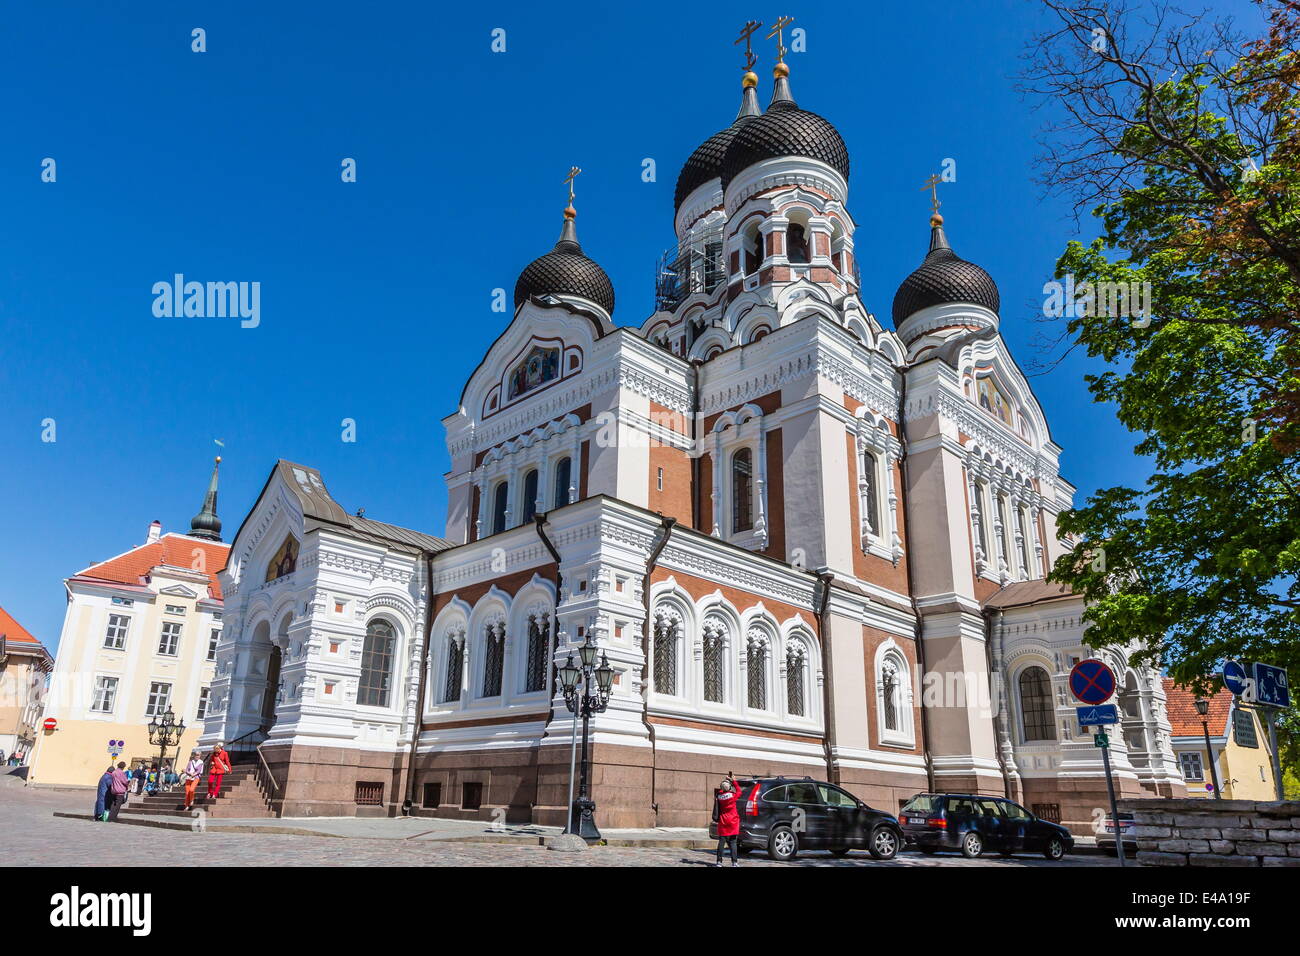 Exterior view of an Orthodox church in the capital city of Tallinn, Estonia, Europe Stock Photo